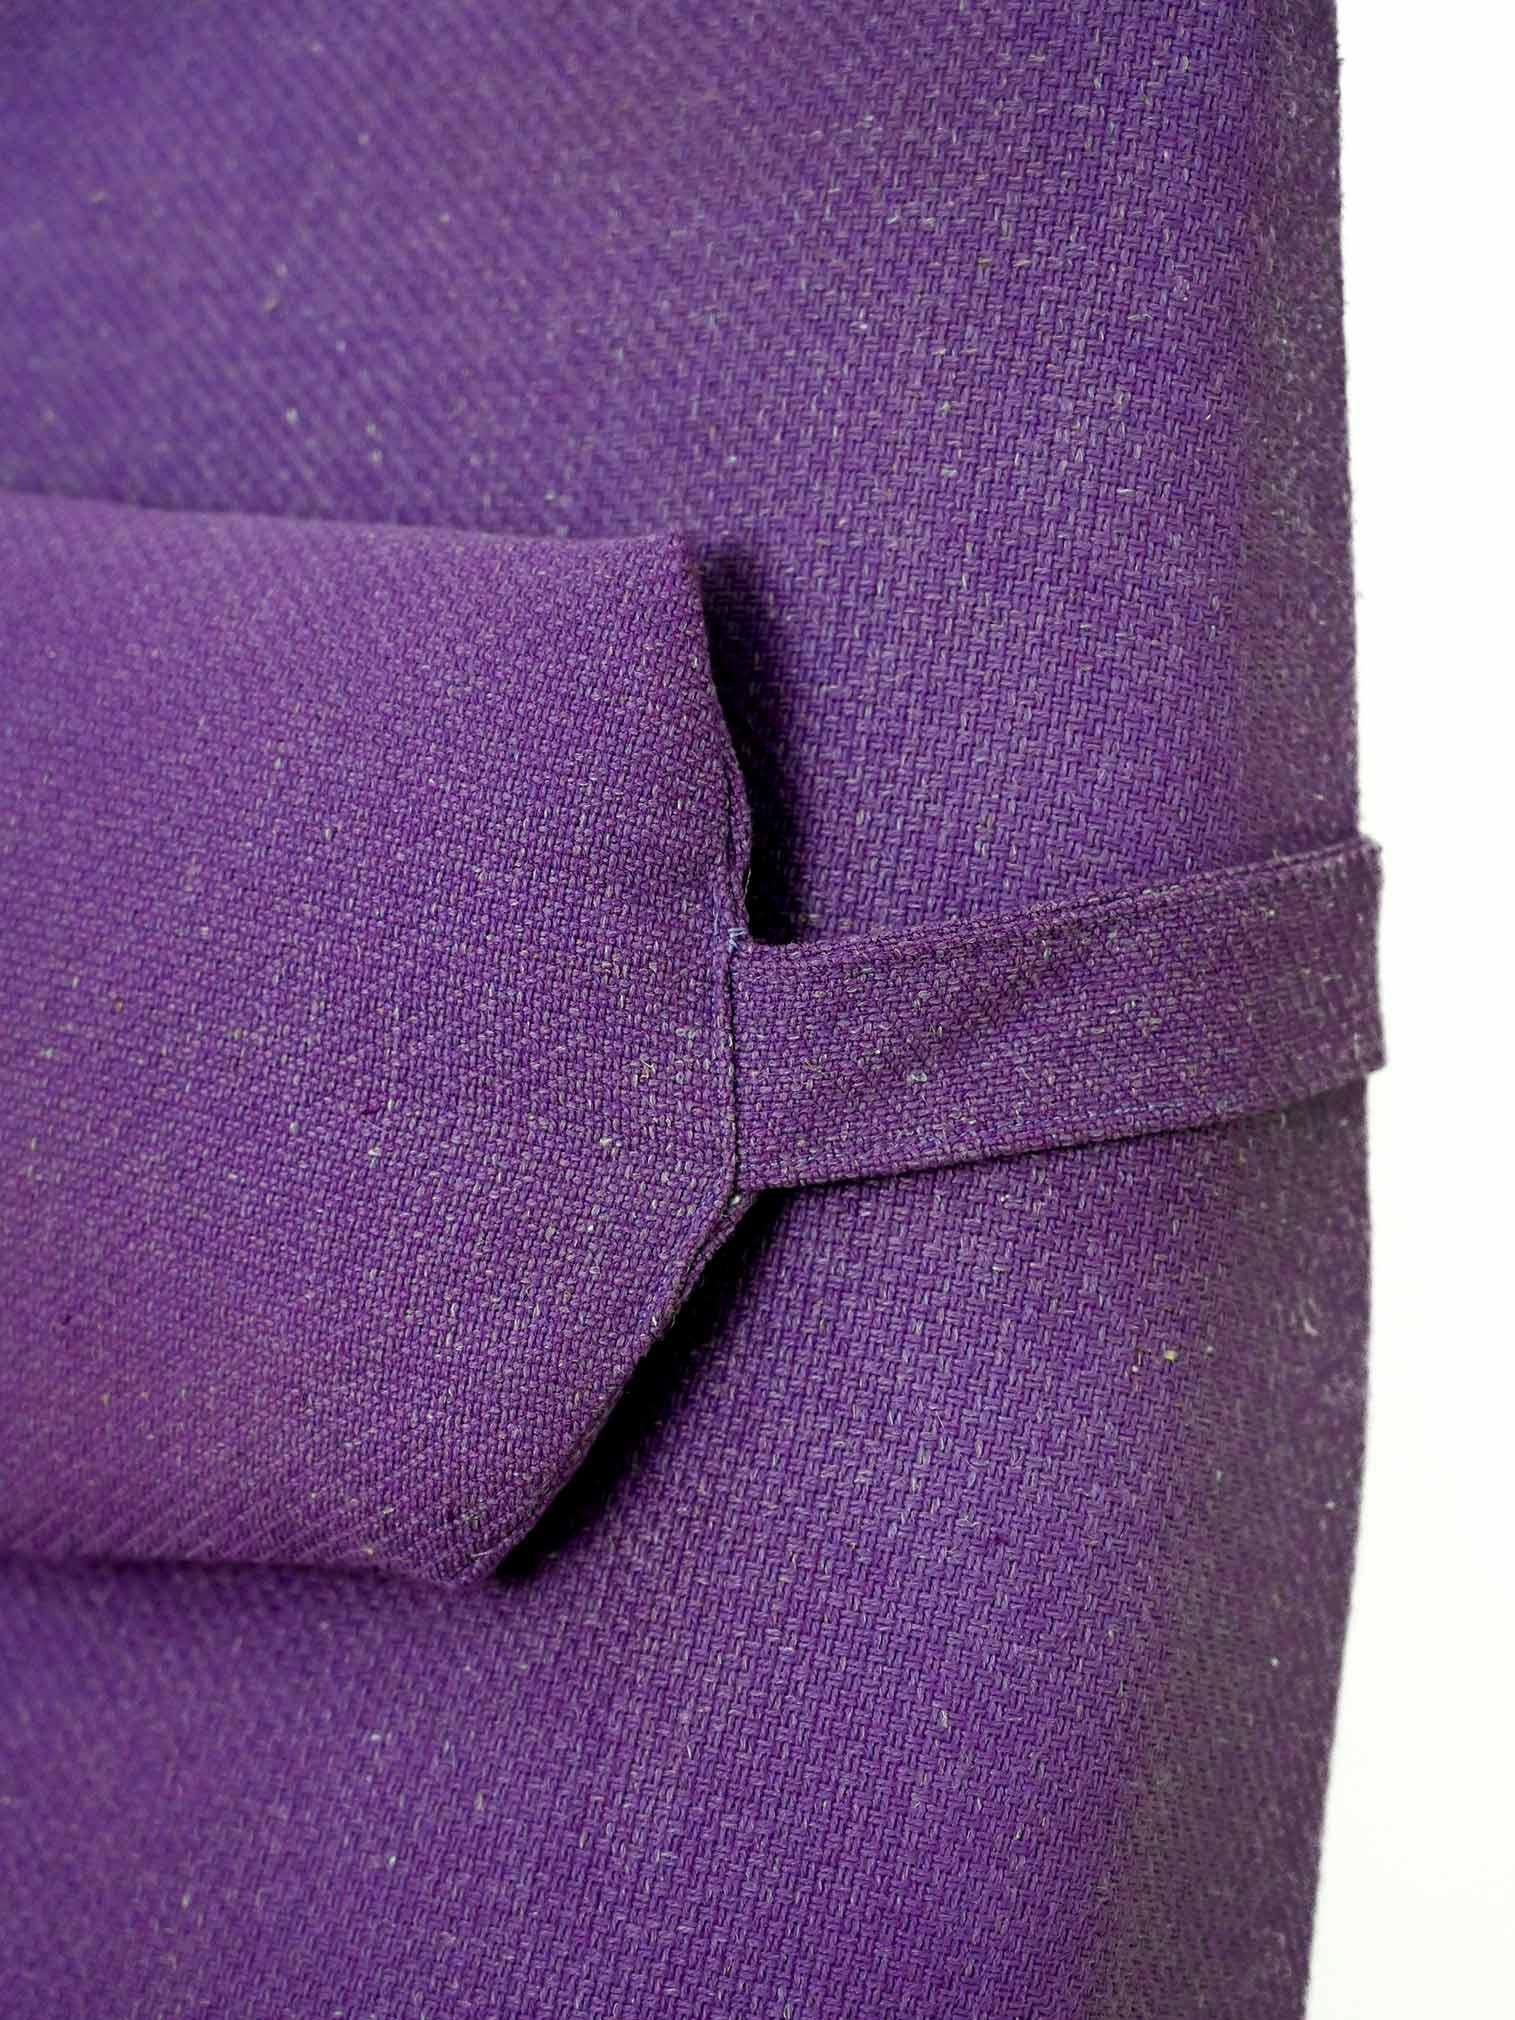 Scandinavian armchair with purple fabric For Sale 6